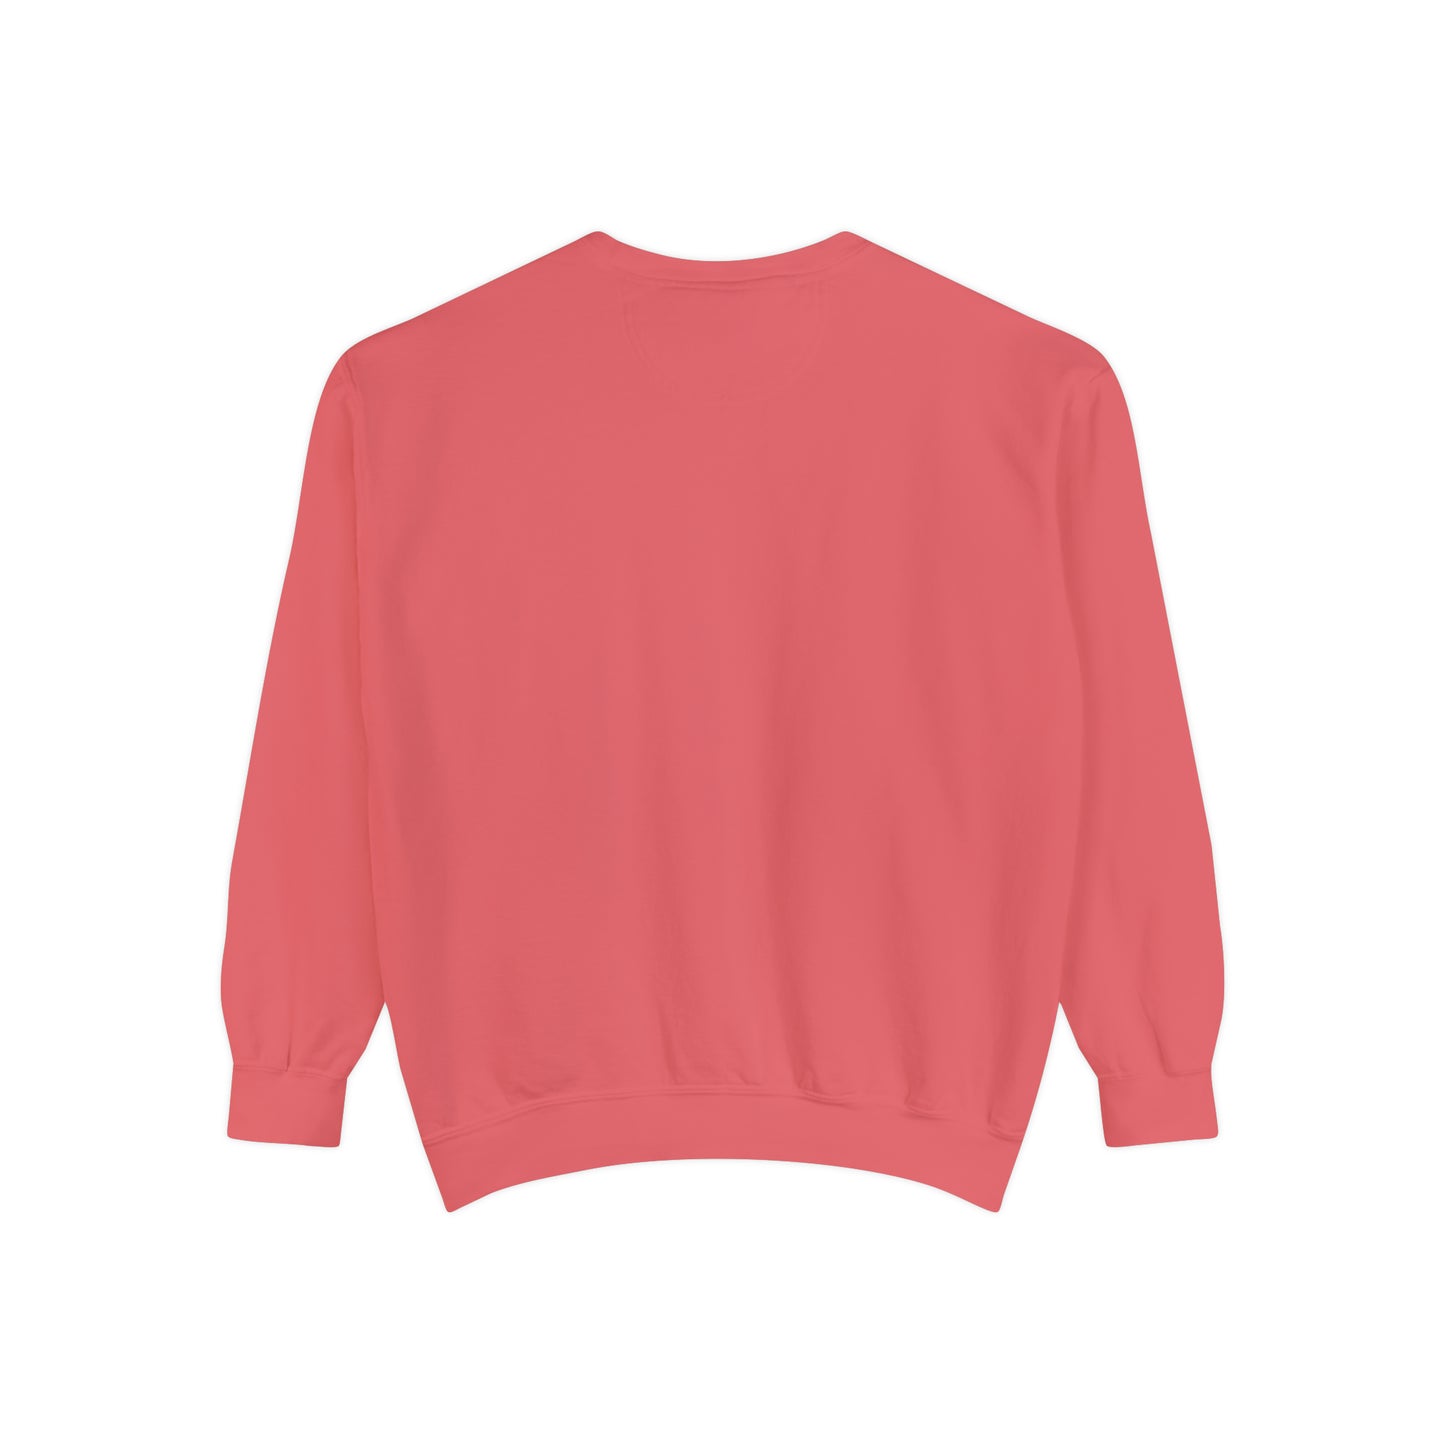 Conversation Hearts Unisex Garment-Dyed Sweatshirt Designed By Nichole Jacklyne